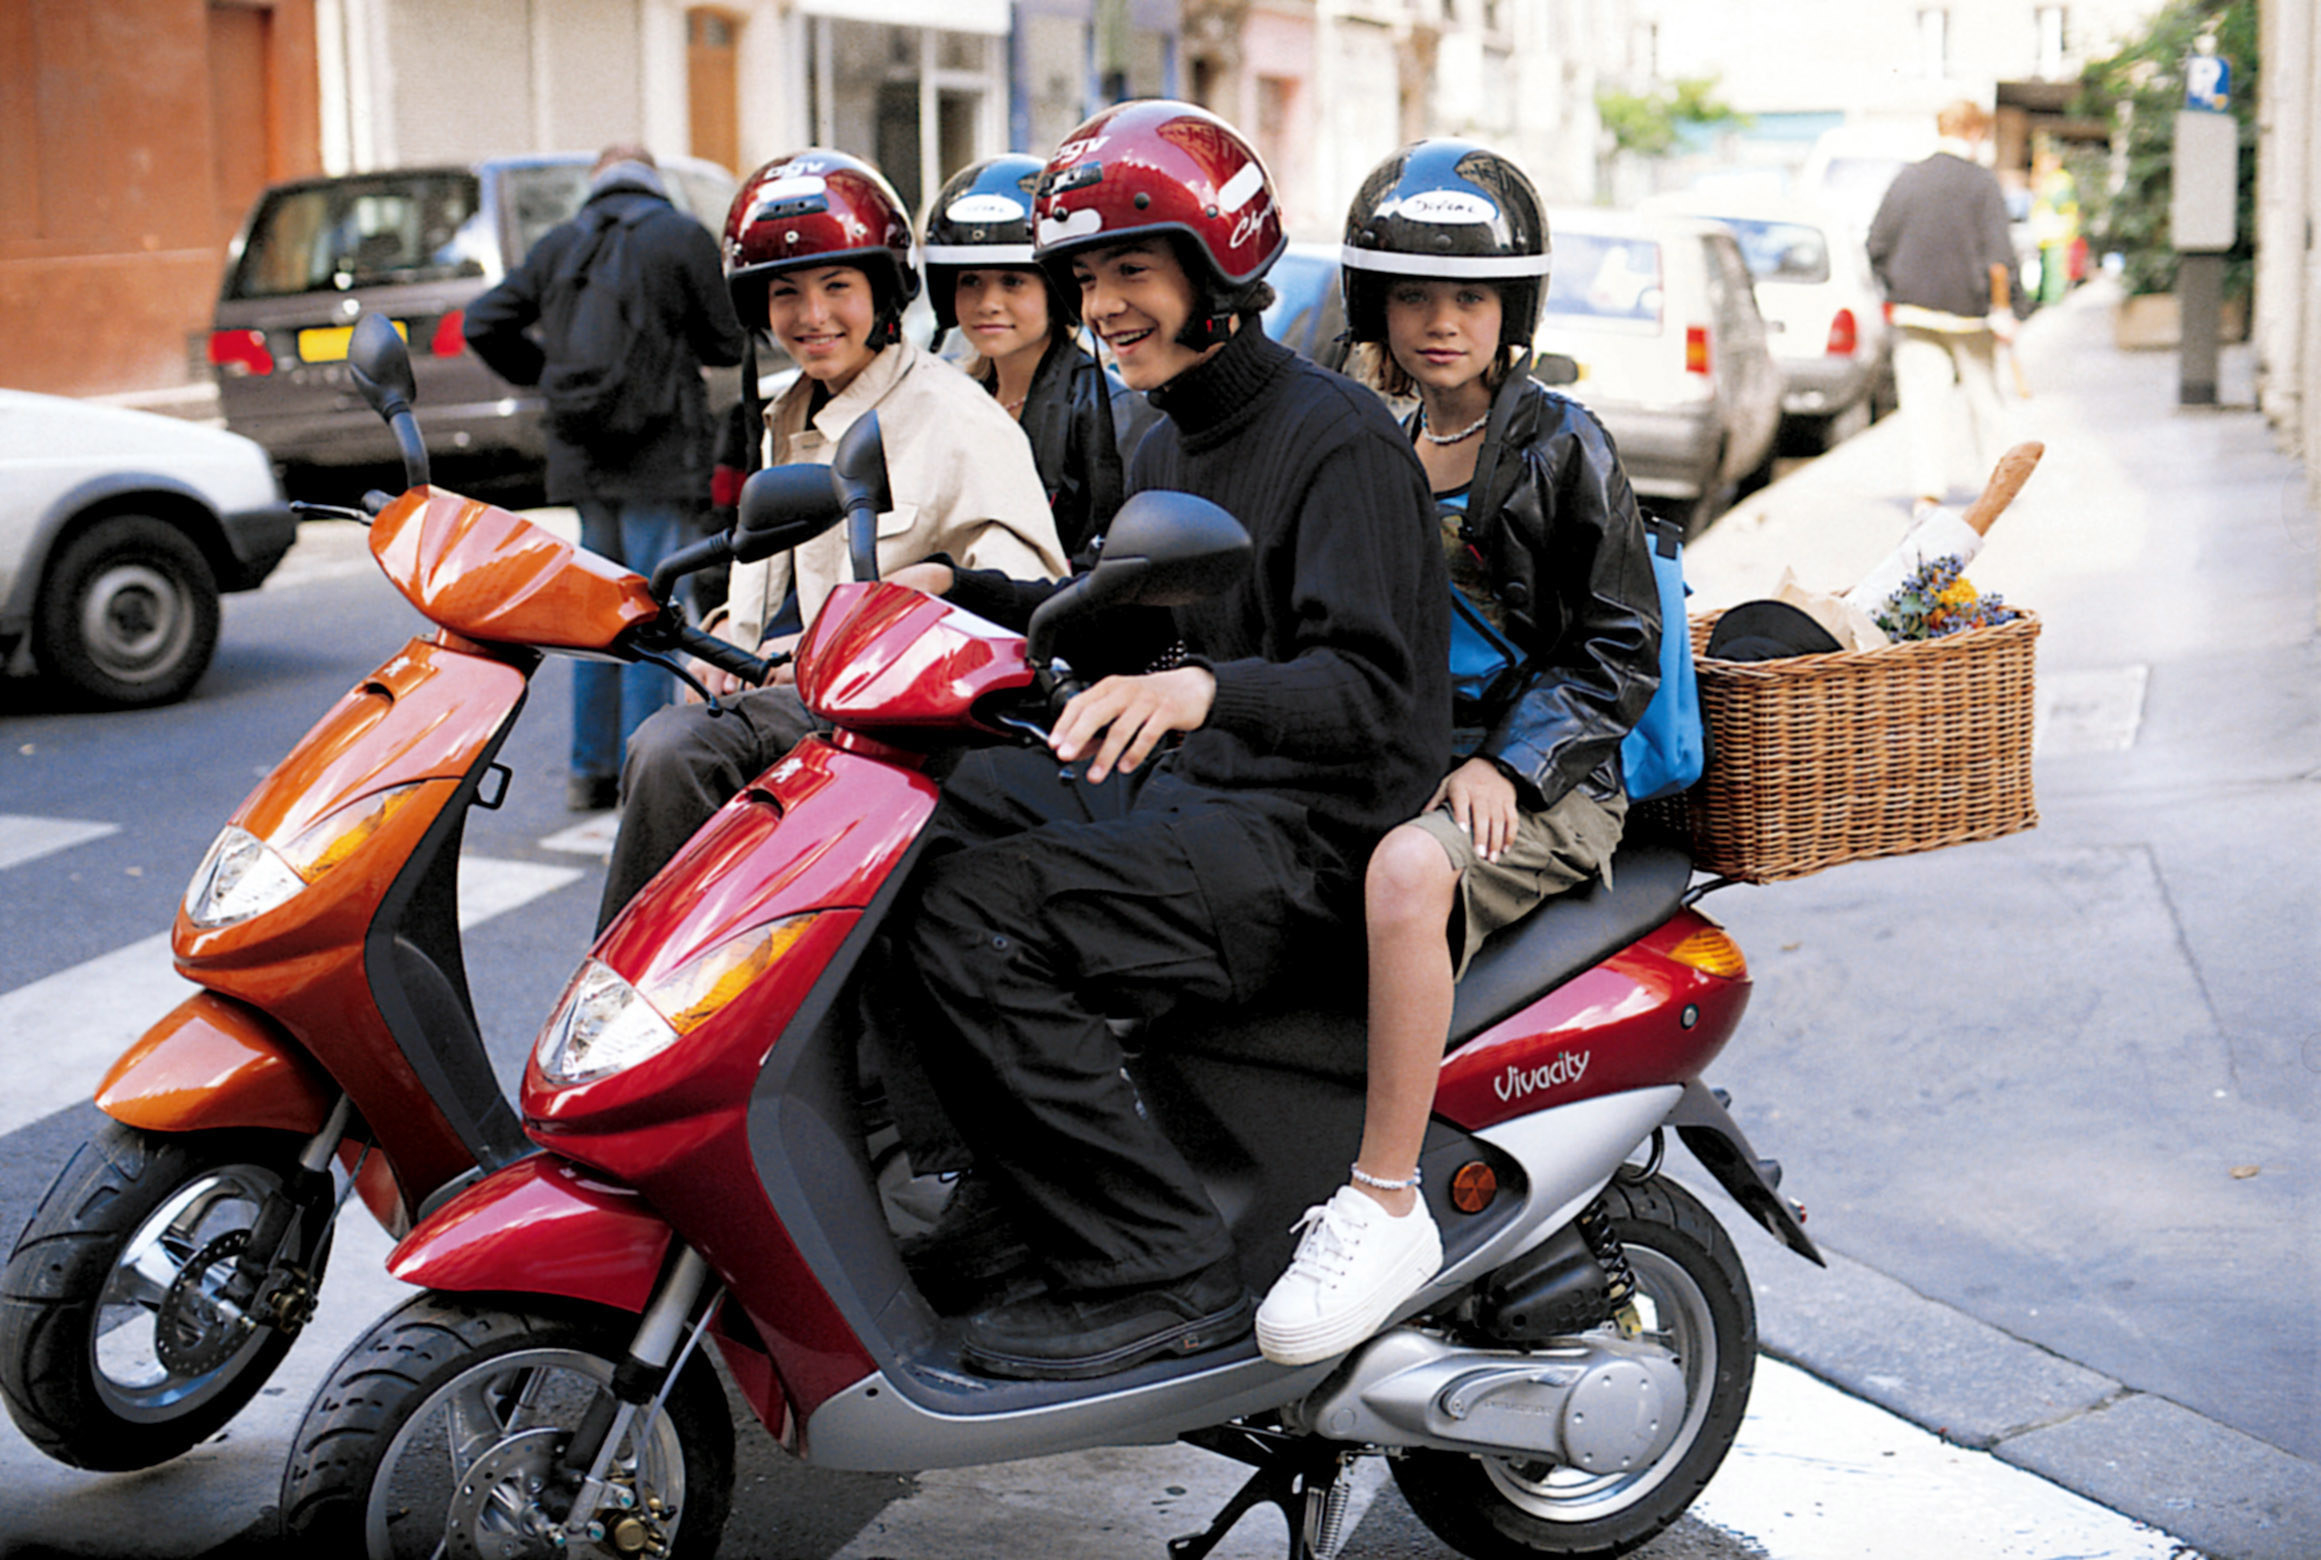 Ethan Peck, Brocker Way, Mary Kate Olsen, and Ashley Olsen riding on mopeds.